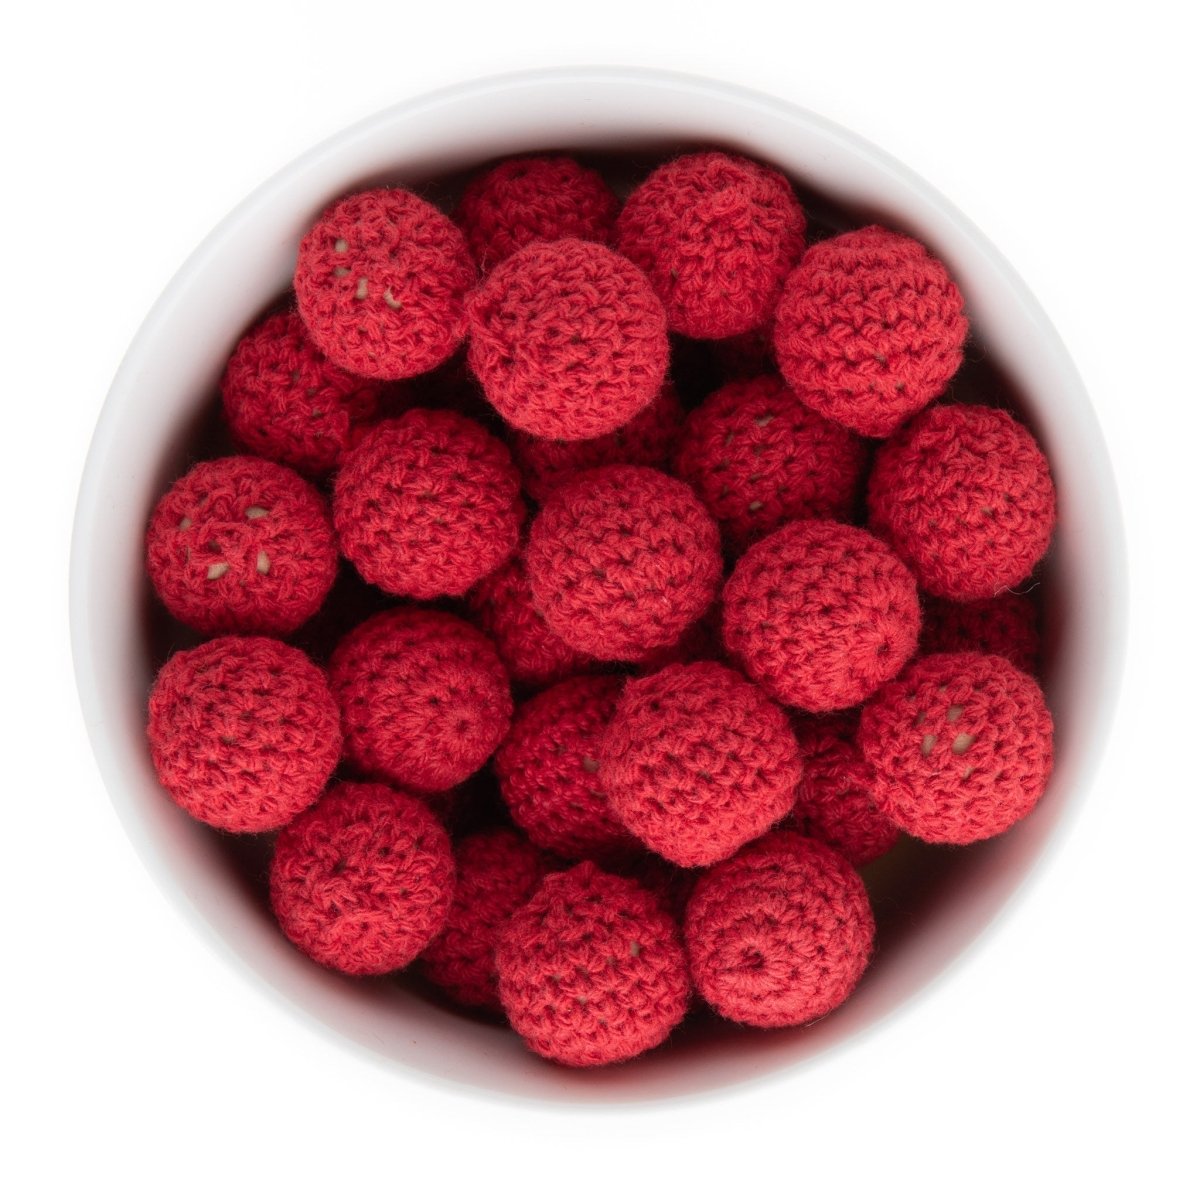 Felt & Crochet Beads 20mm Crochet Beads Cherry Red from Cara & Co Craft Supply